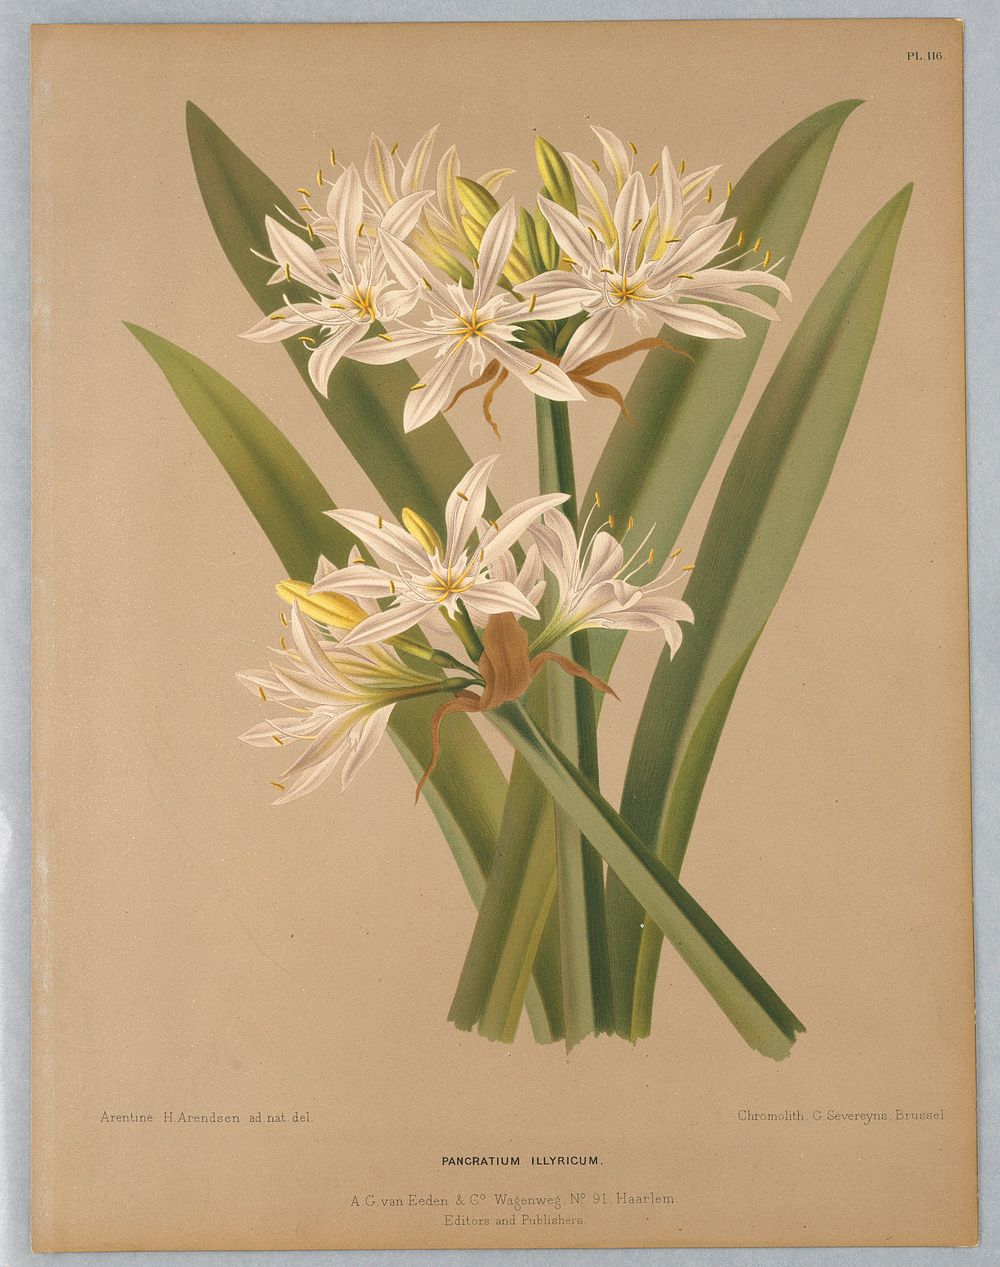 Pancratium Illyricum, Plate 116 from A. C. Van Eeden's "Flora of Haarlem"